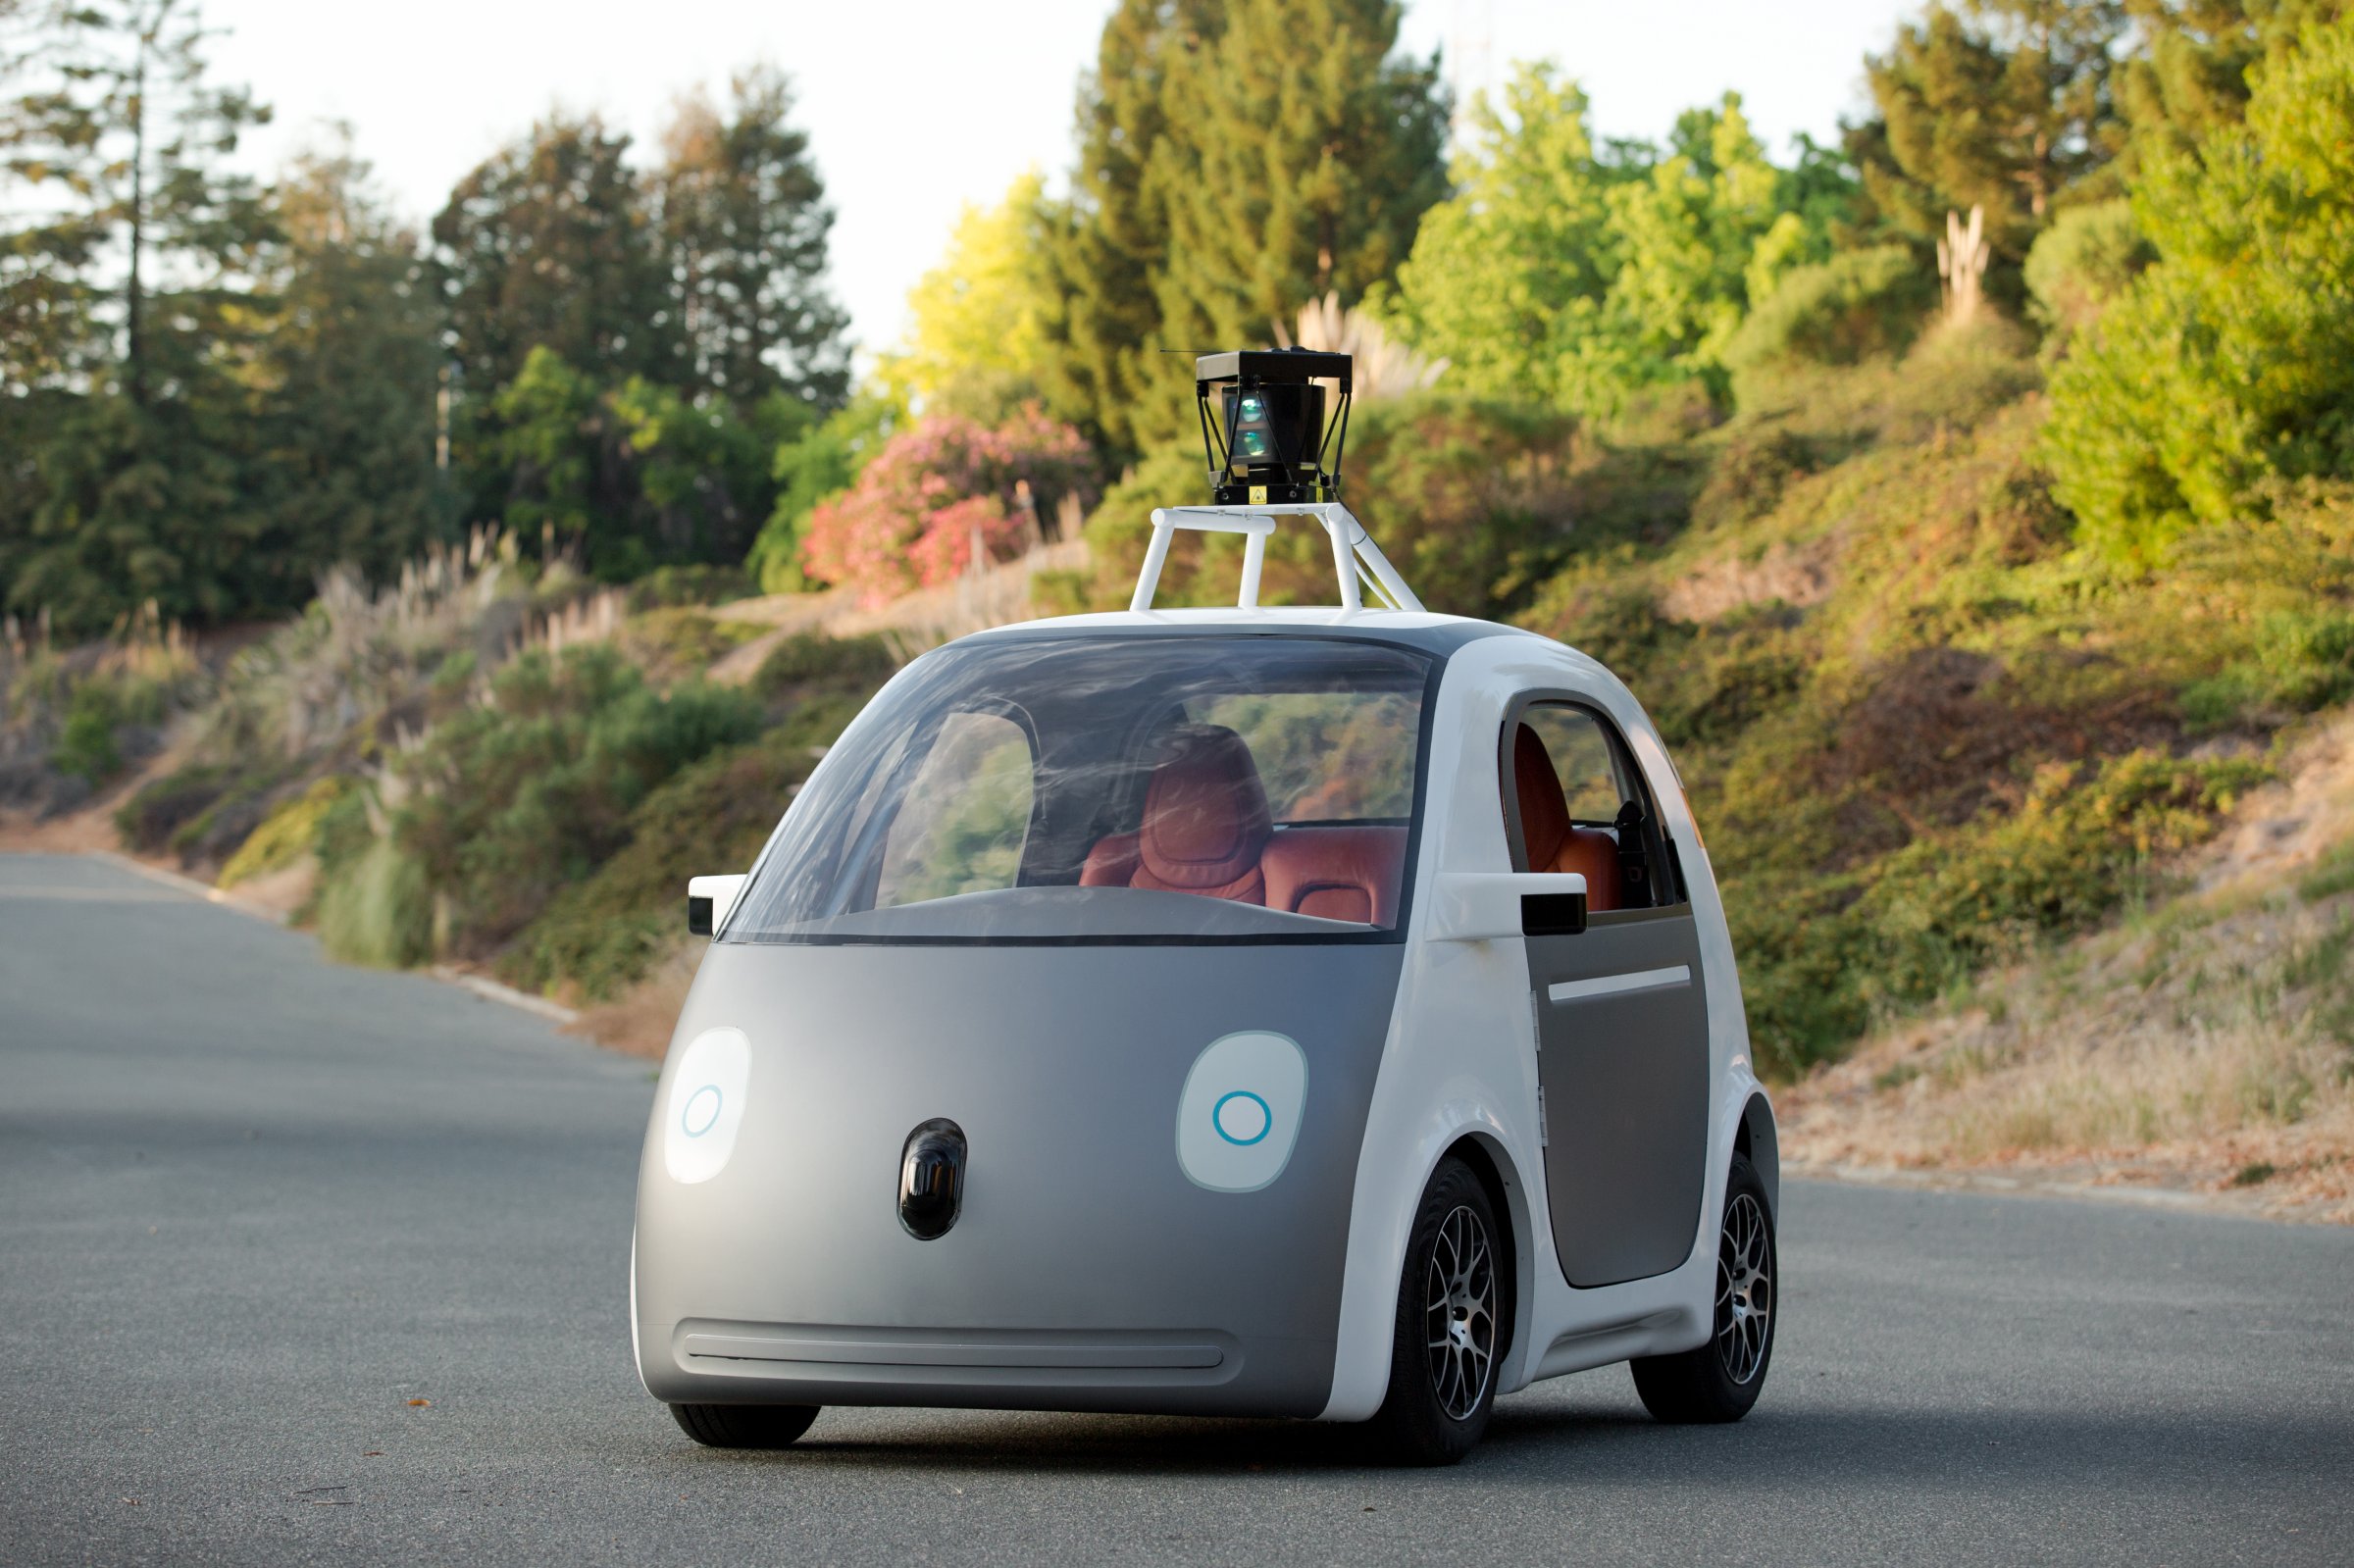 Vehicle prototype photo of Google's self-driving car.